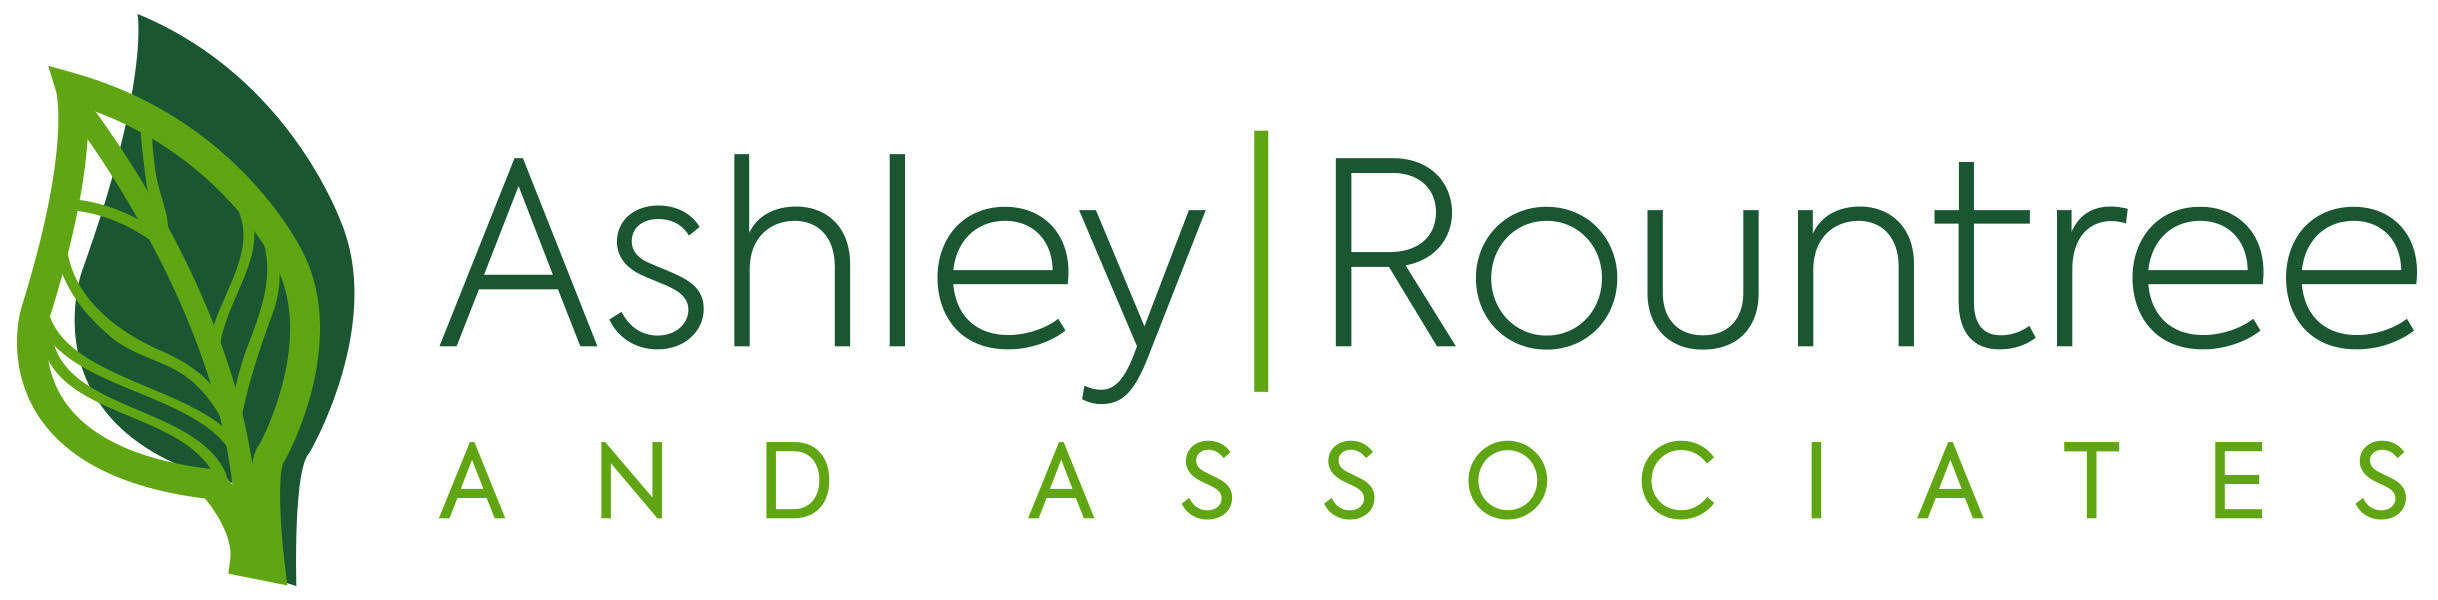 Ashley Rountree & Associates Logo